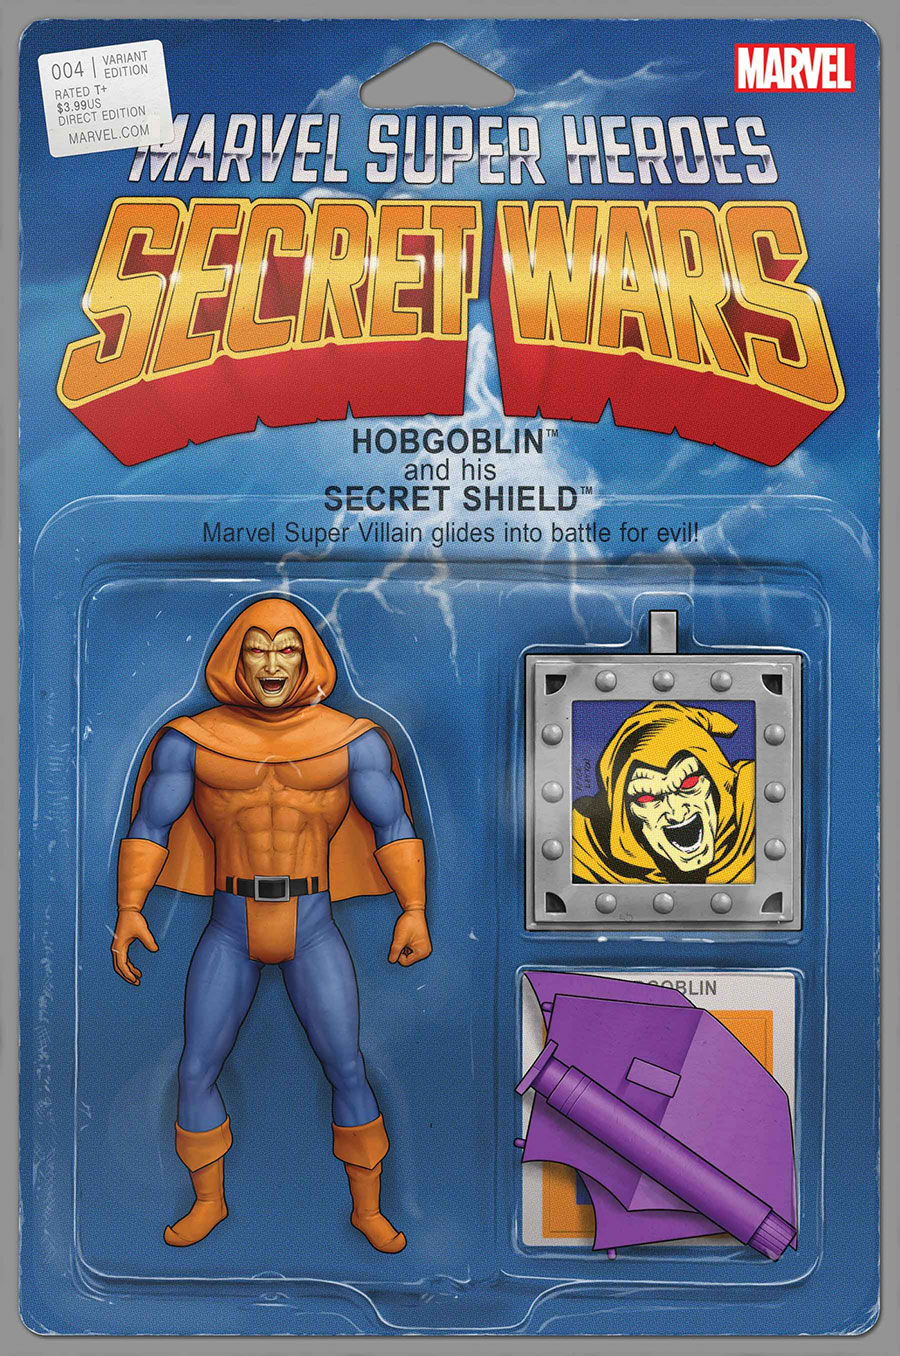 Marvel Super Heroes Secret Wars Battleworld #4 Cover C Variant John Tyler Christopher Action Figure Cover